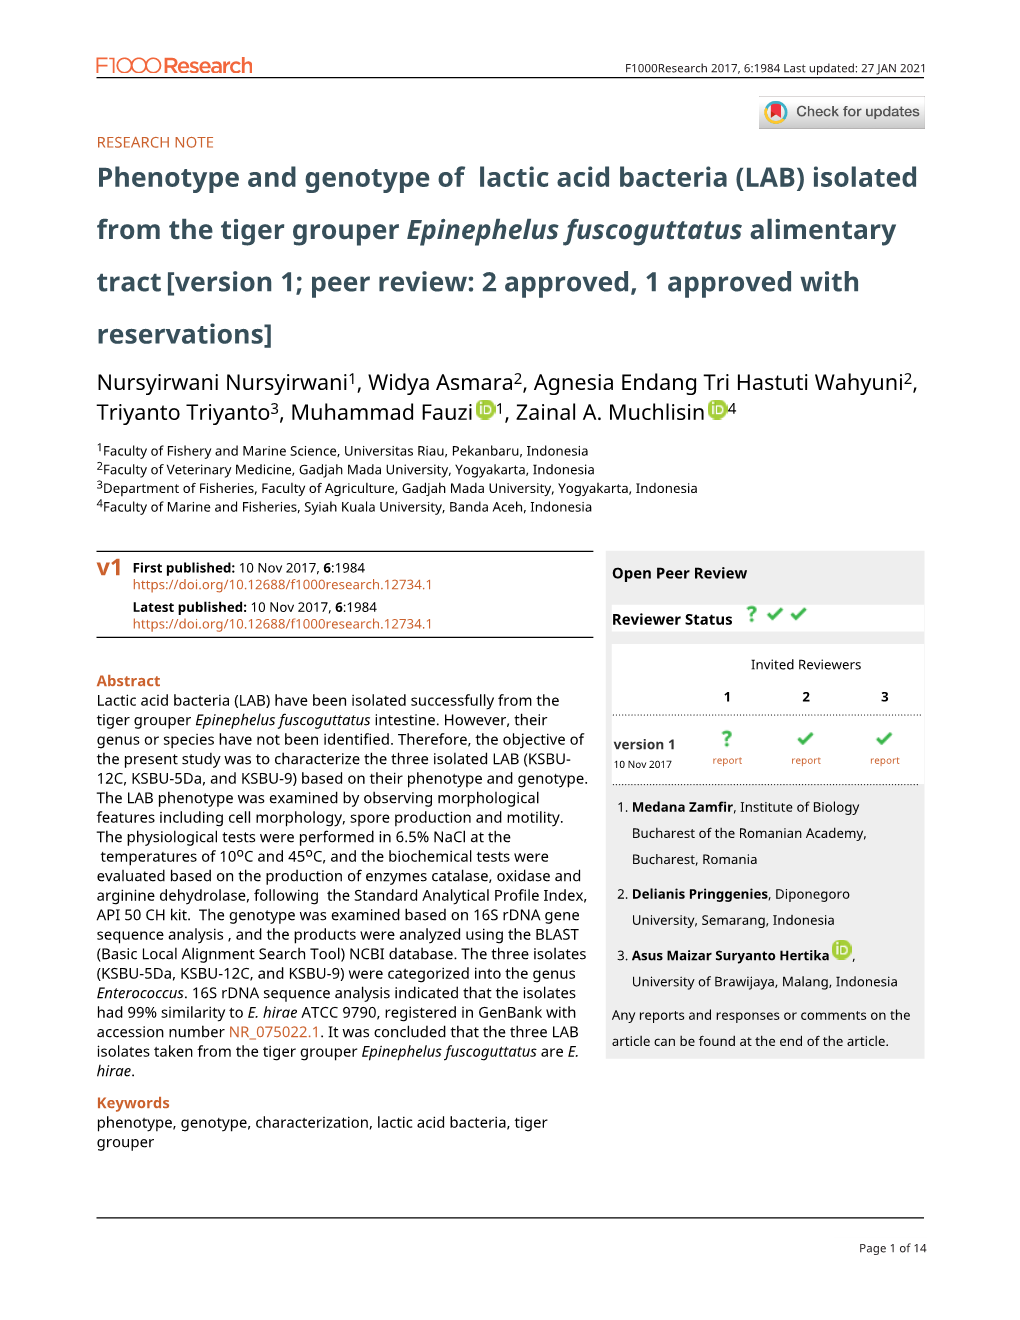 Phenotype and Genotype of Lactic Acid Bacteria